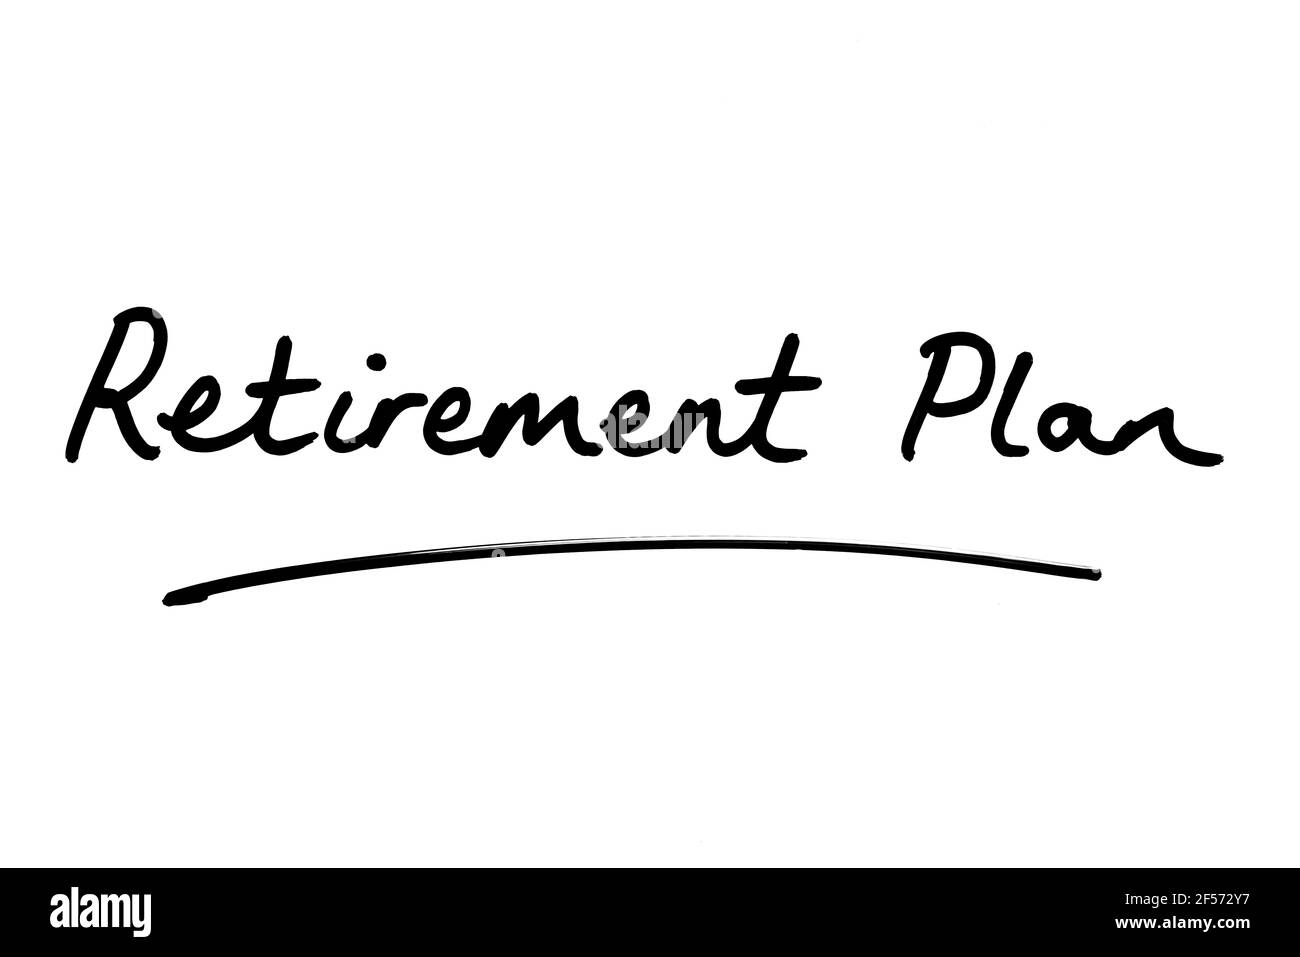 Retirement Plan, handwritten on a white background. Stock Photo